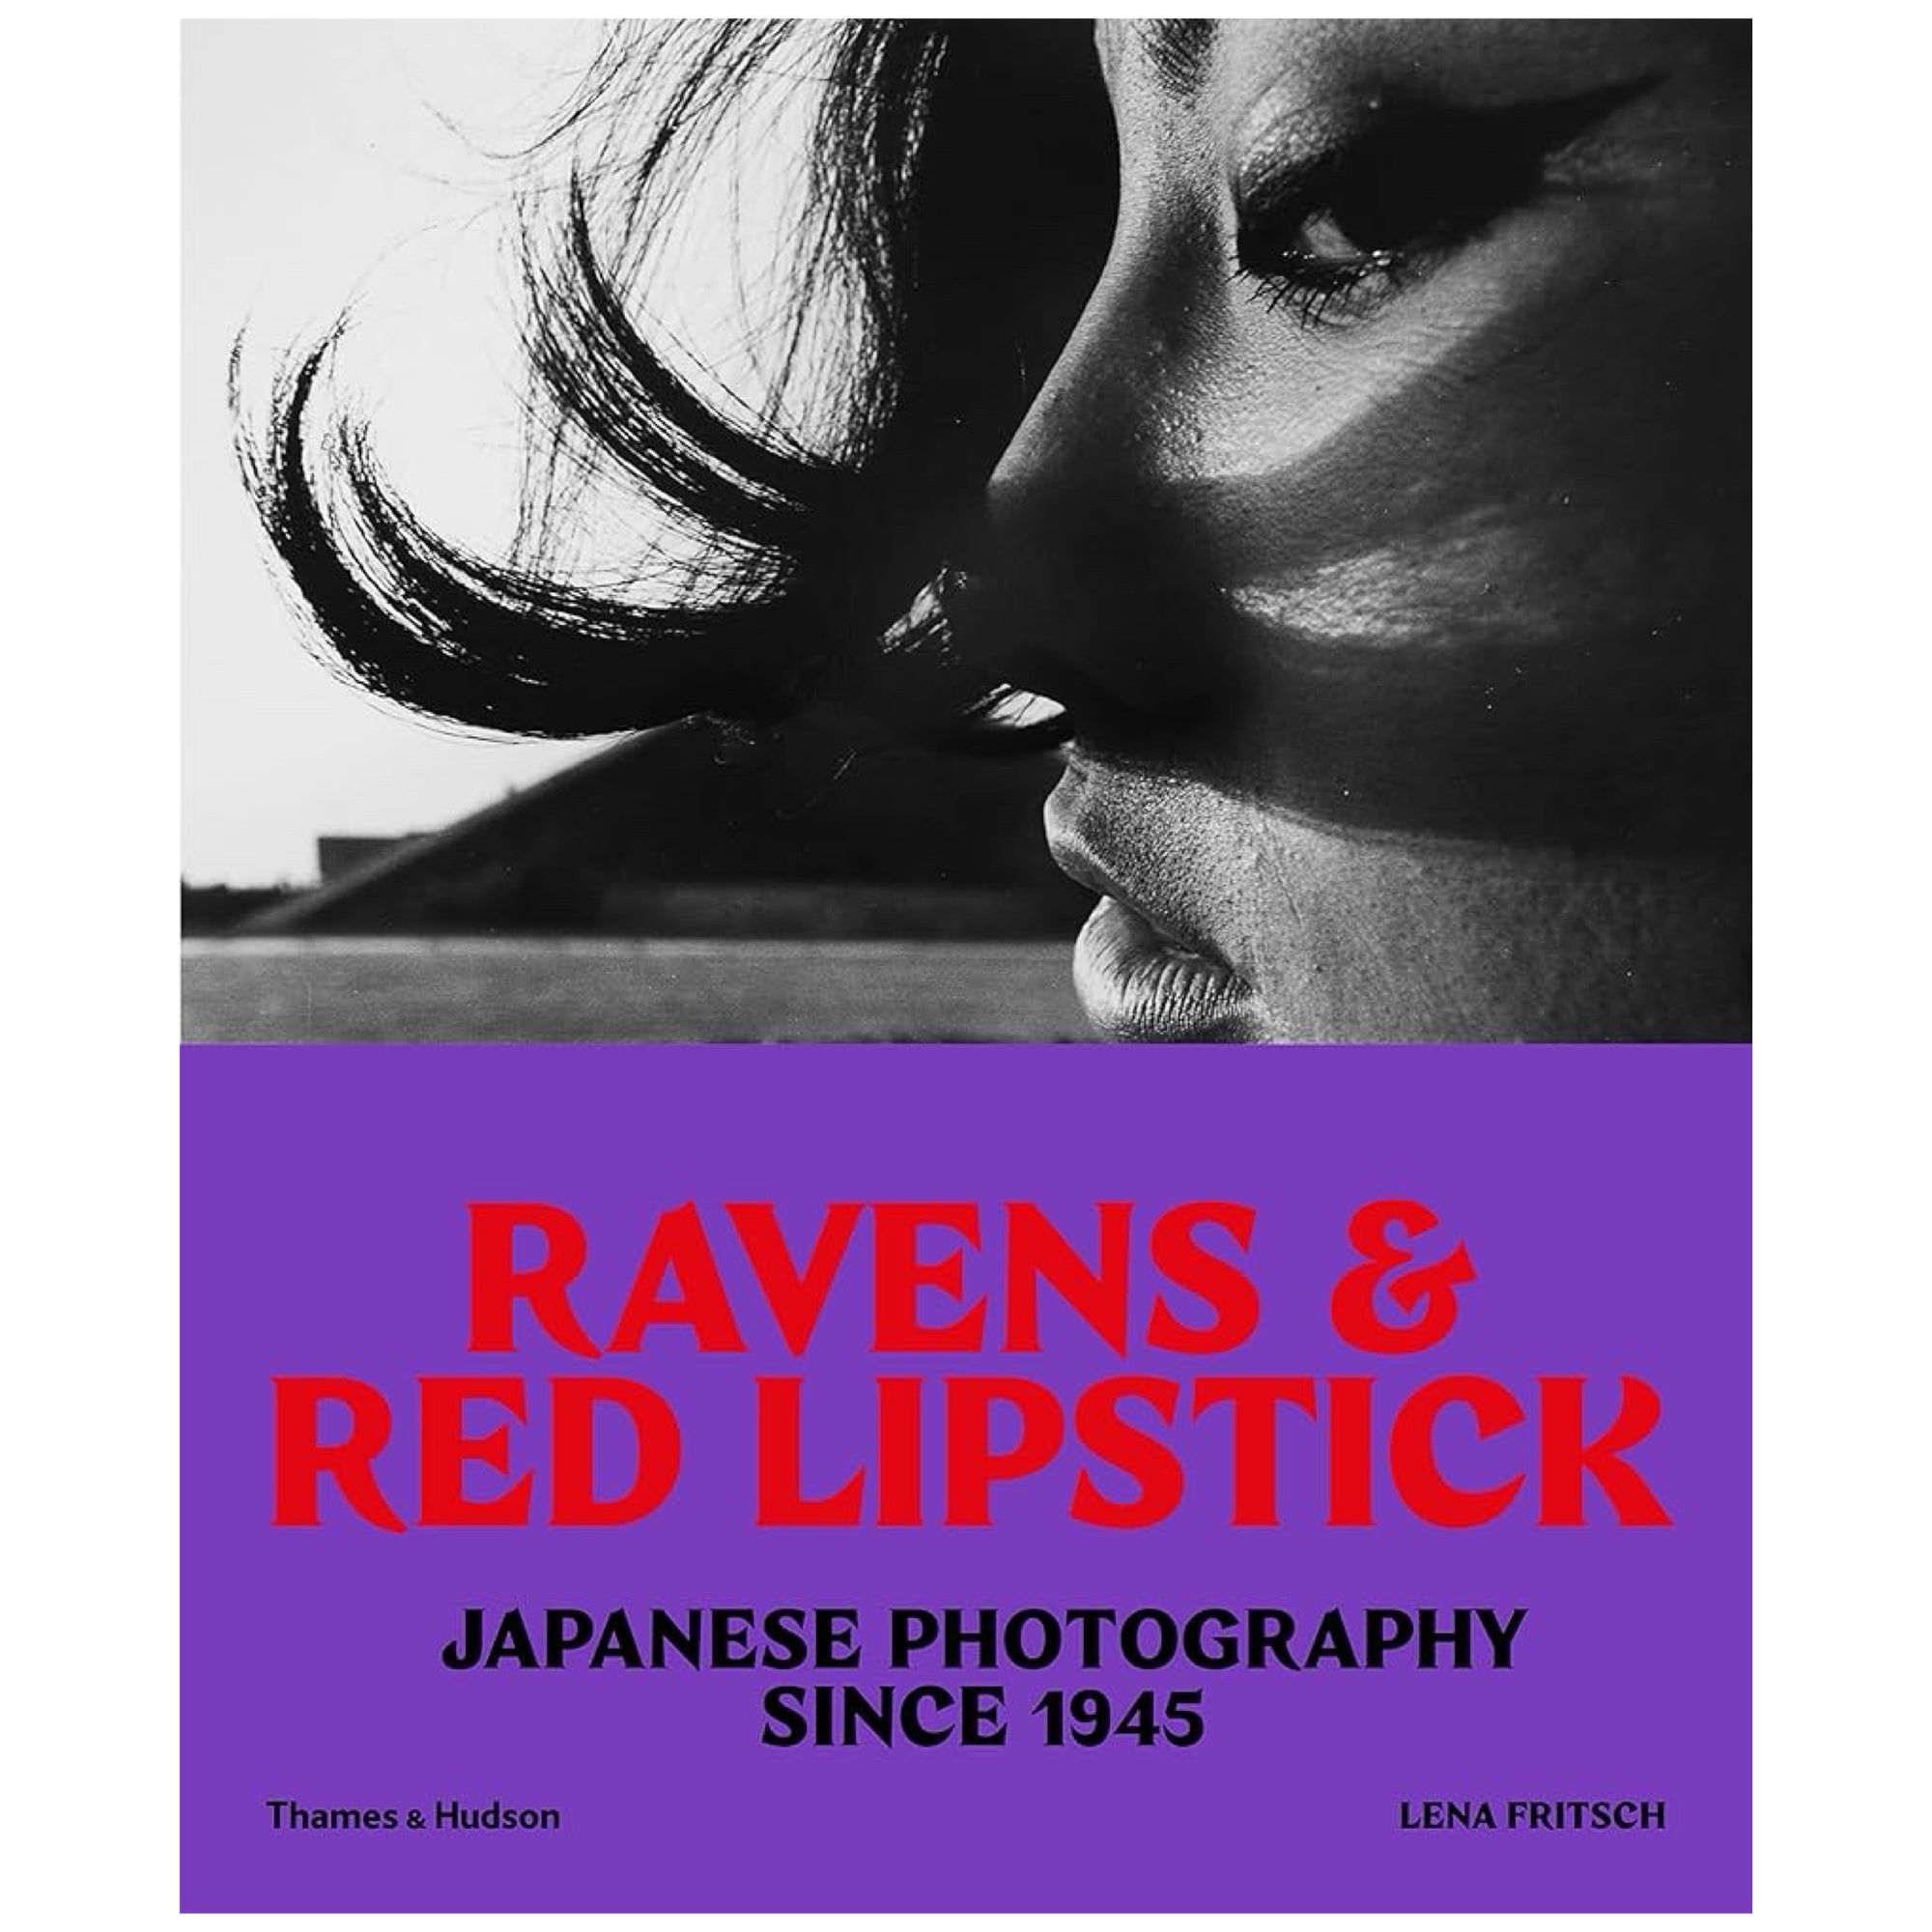 Ravens & Red Lipstick - Japanese Photography Since 1945